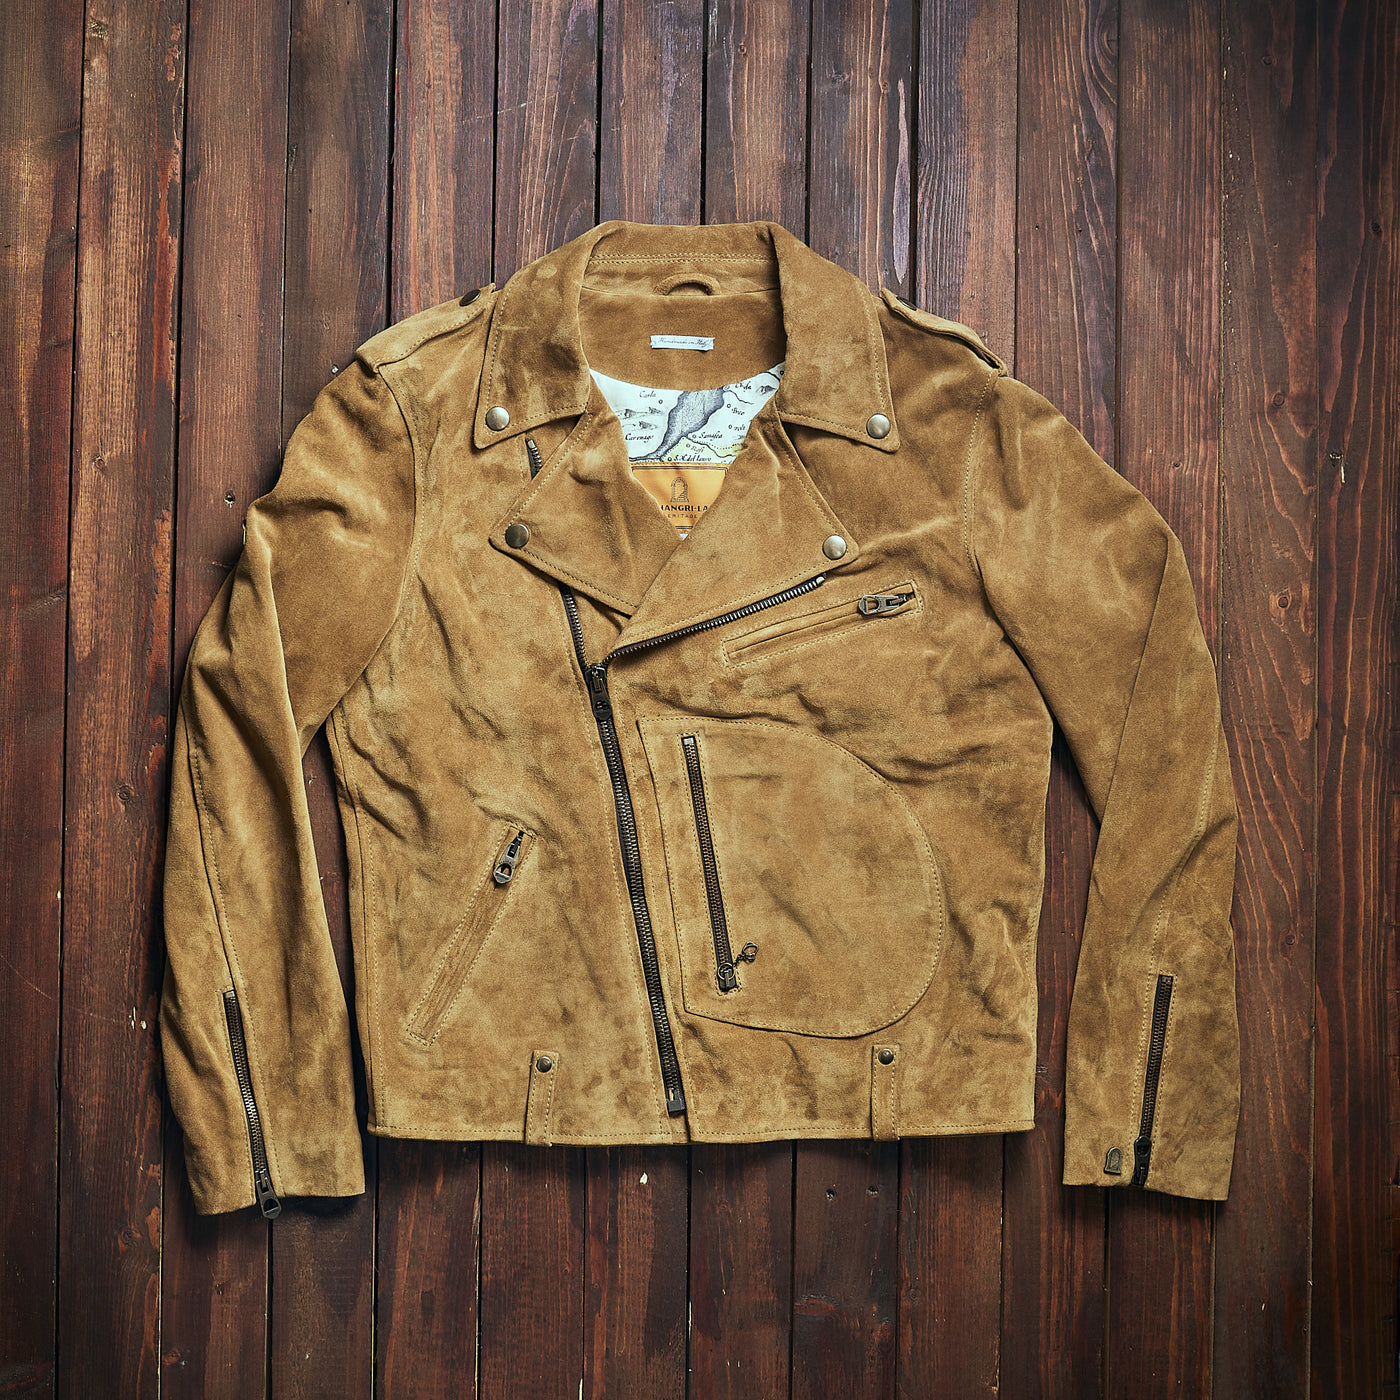 Shangri La Heritage “Chiodo” Golden Suede Leather Jacket